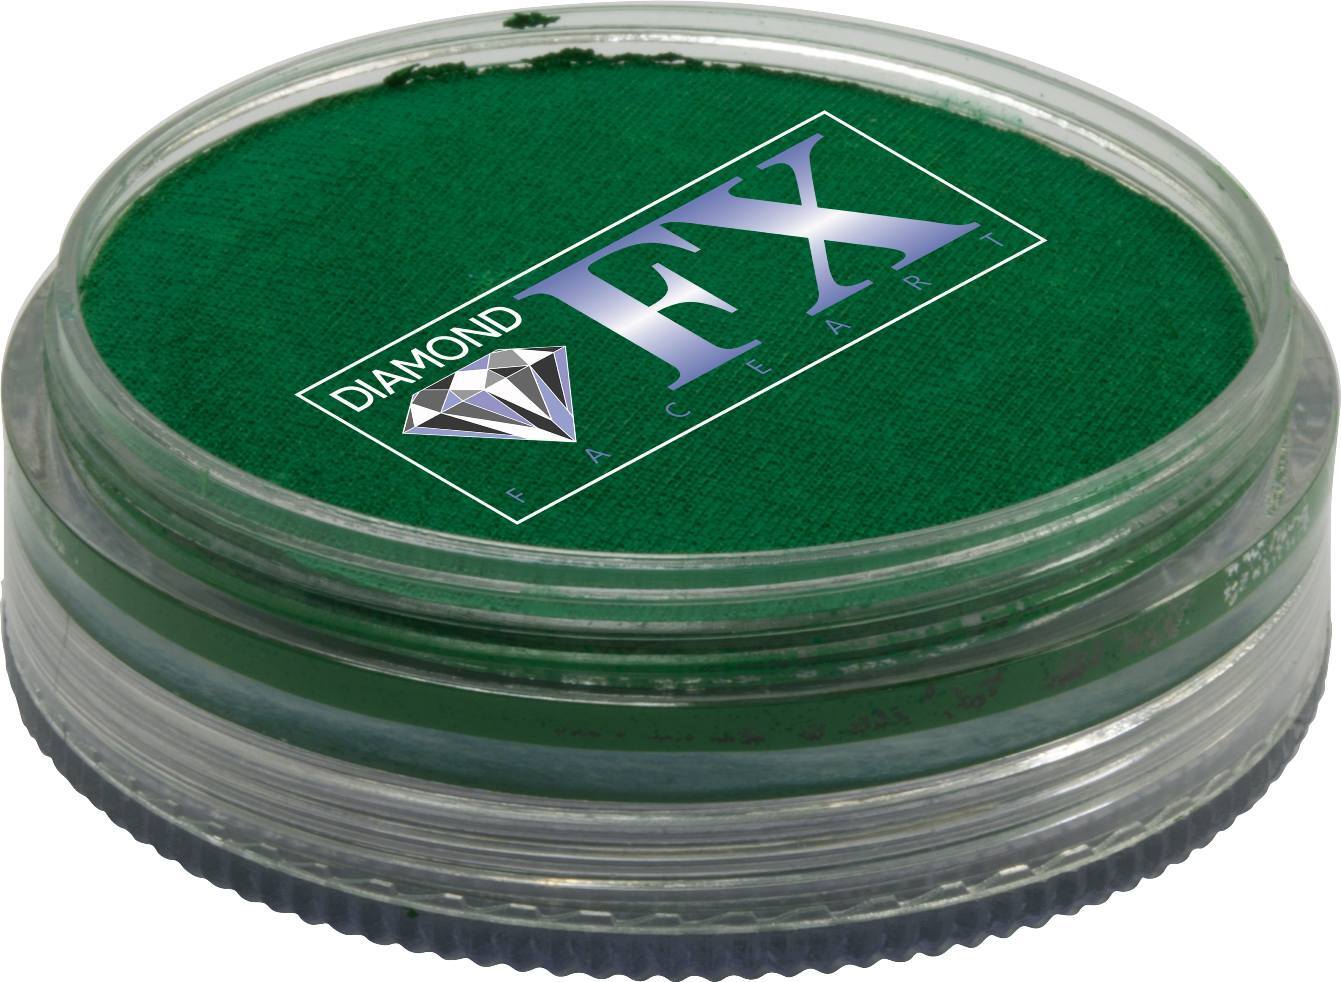 Diamond FX Green 45g - Small Image